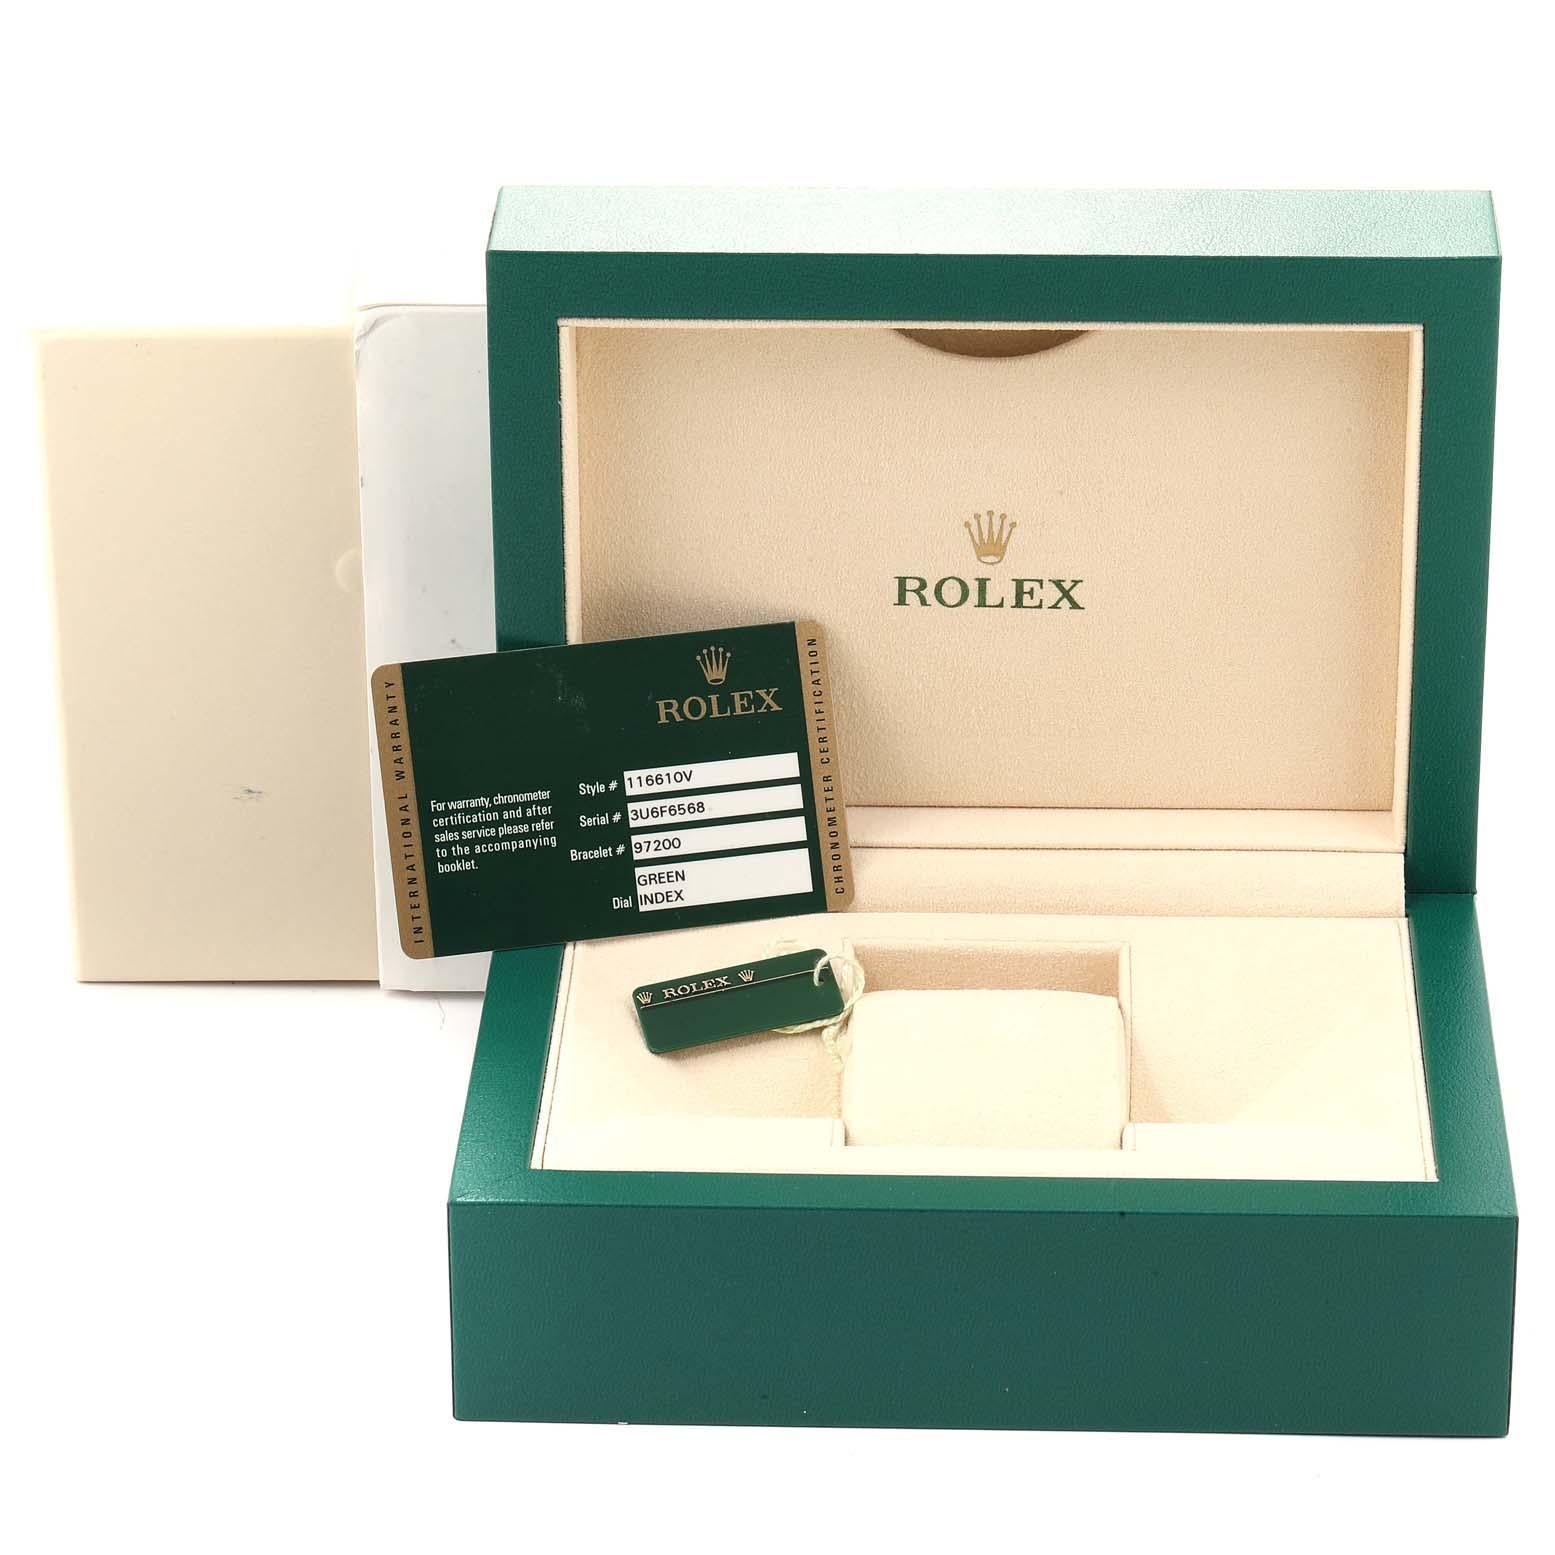 Rolex Submariner Hulk Green Dial Bezel Men's Watch 116610LV Box Card For Sale 6